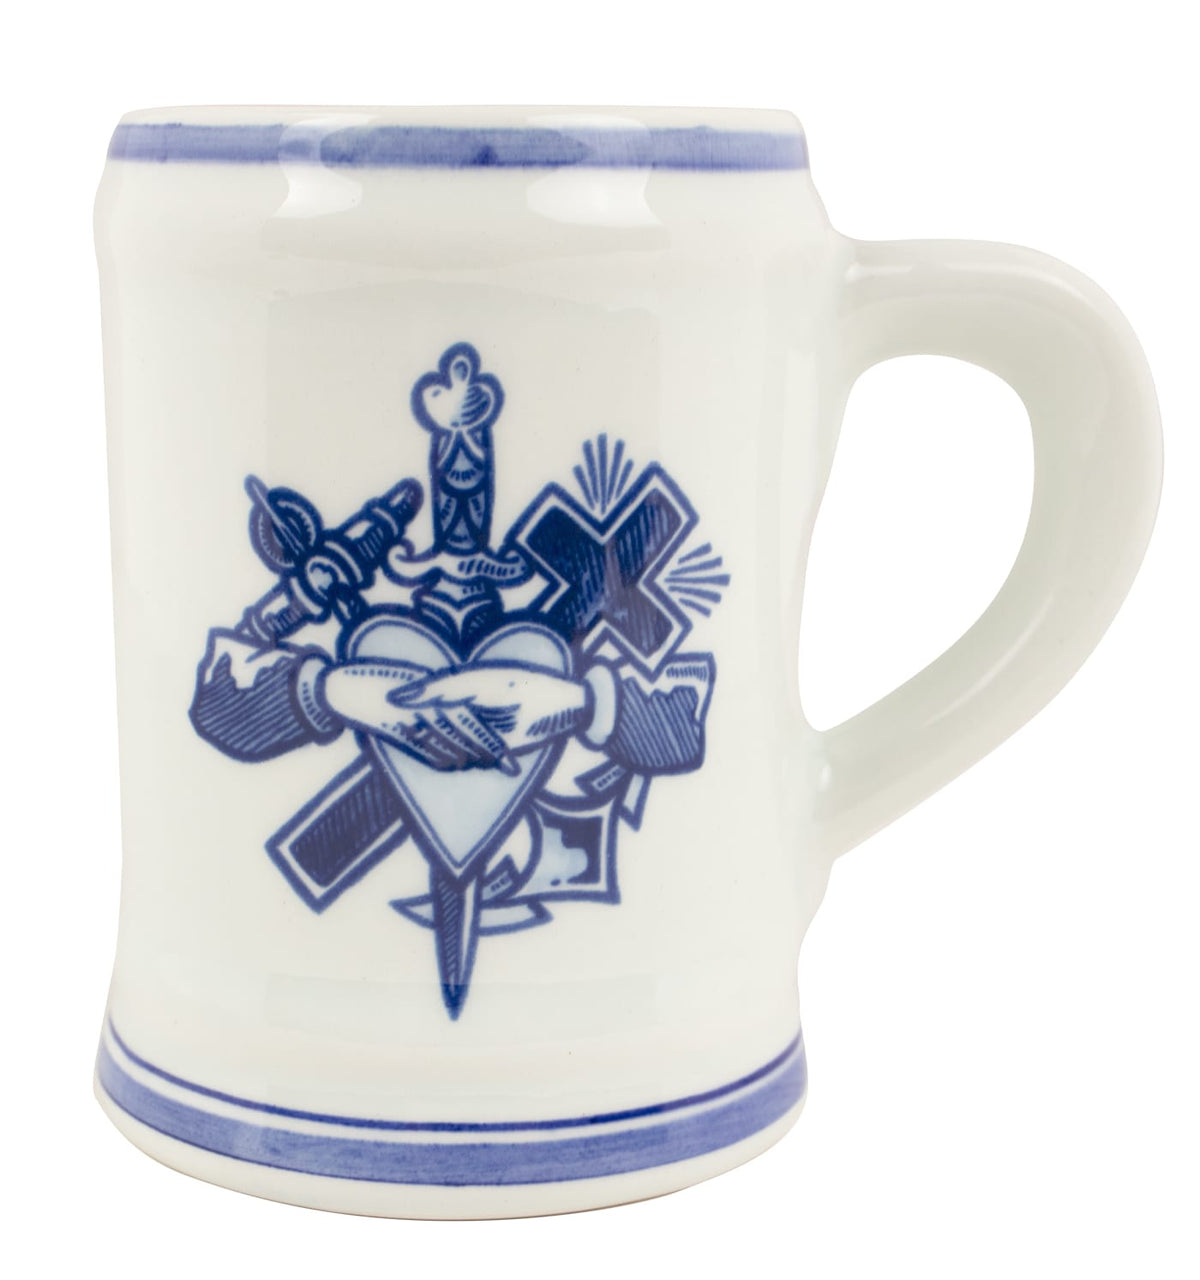 Schiffmacher Beer Mug - Schiffmacher Royal Blue Tattoo by Royal Delft